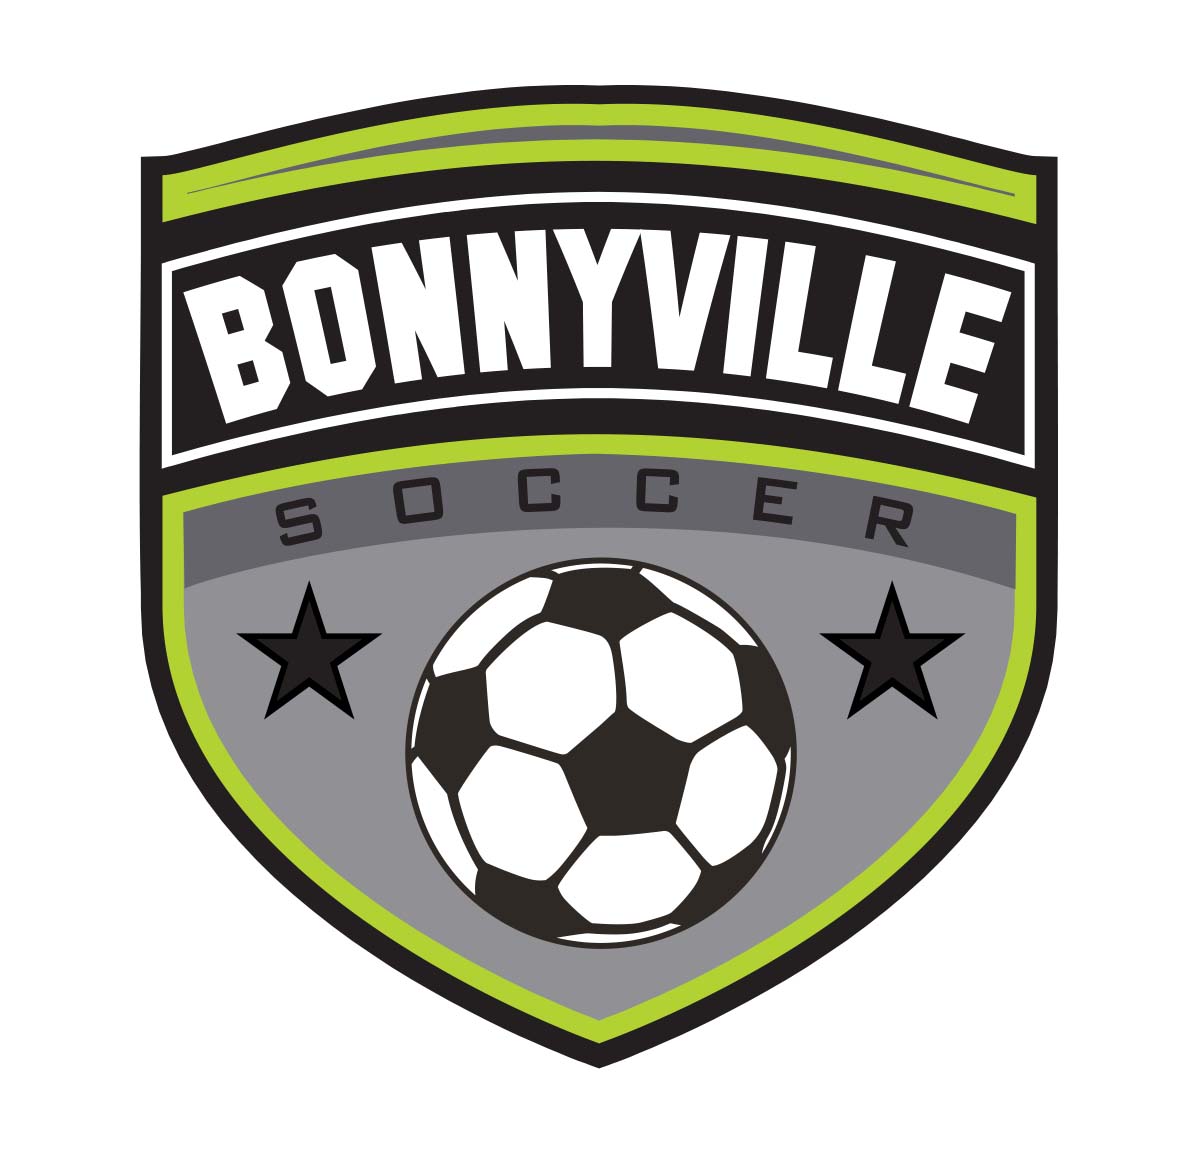 Bonnyville Soccer Association